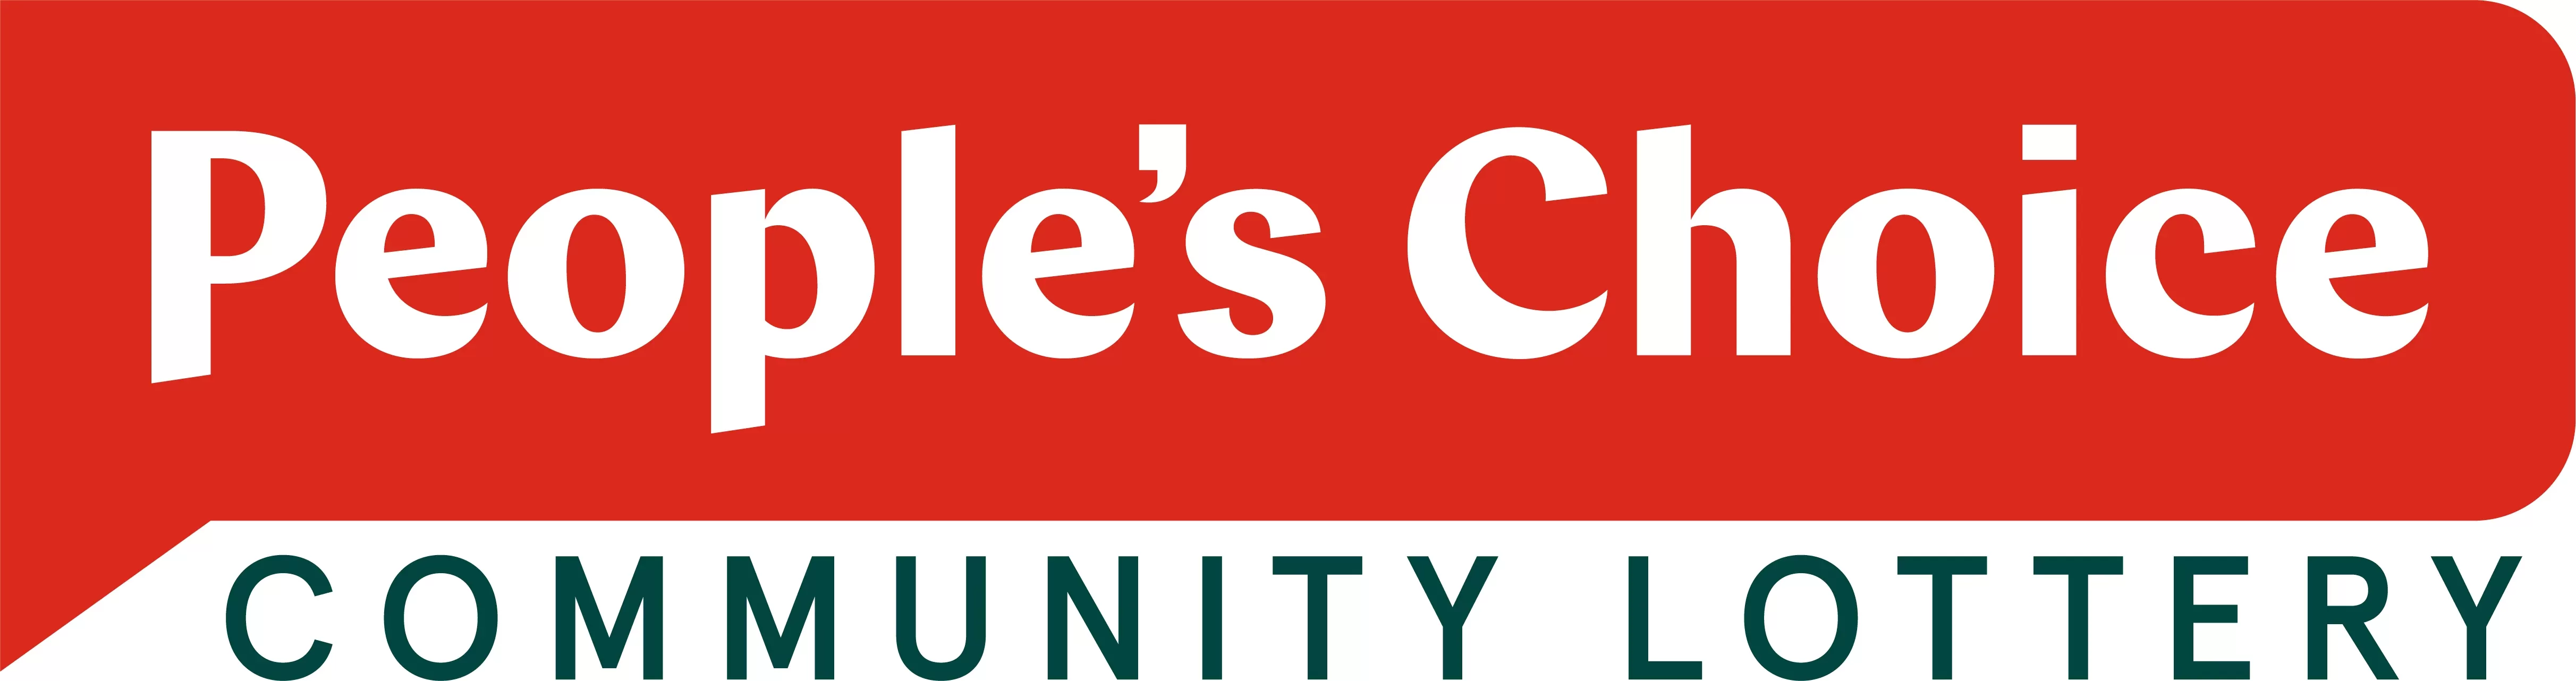 People's Choice Community Lottery logo